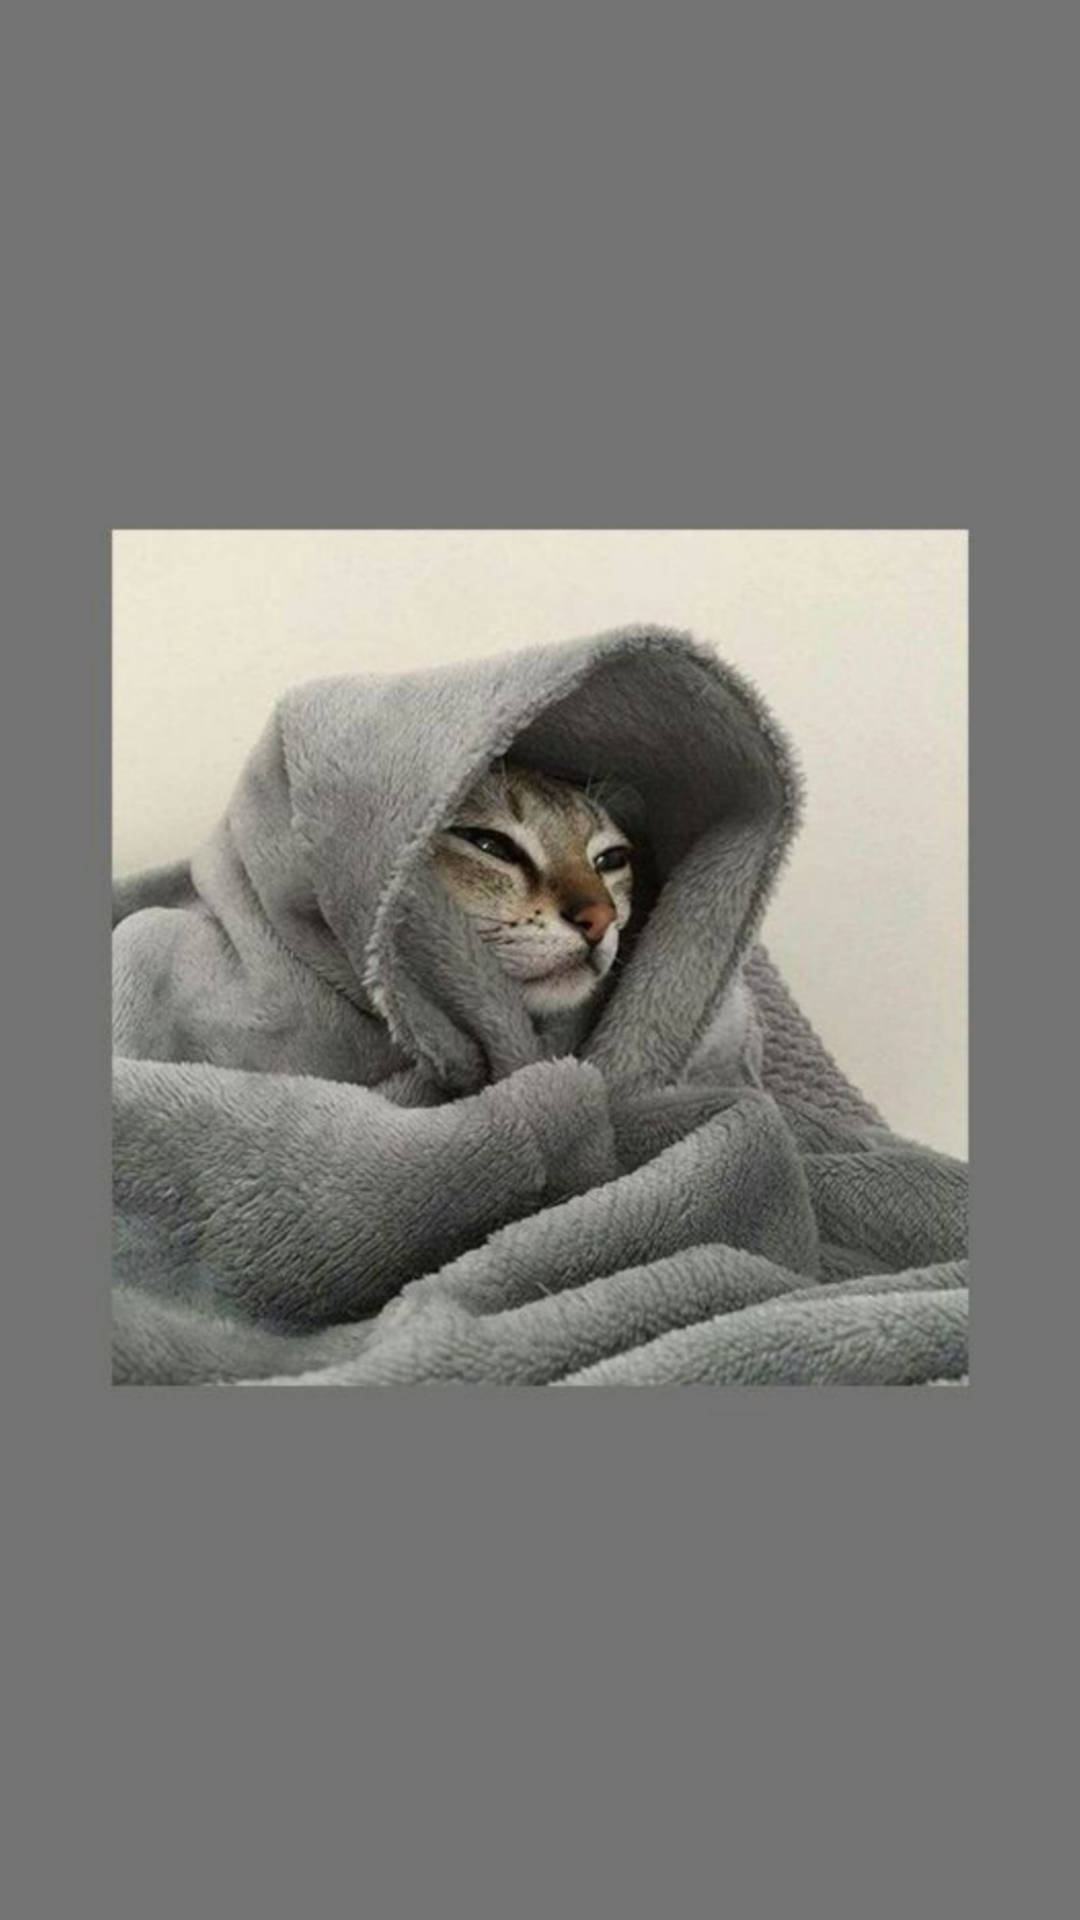 Top 999+ Cute Cat Aesthetic Wallpaper Full HD, 4K✅Free to Use